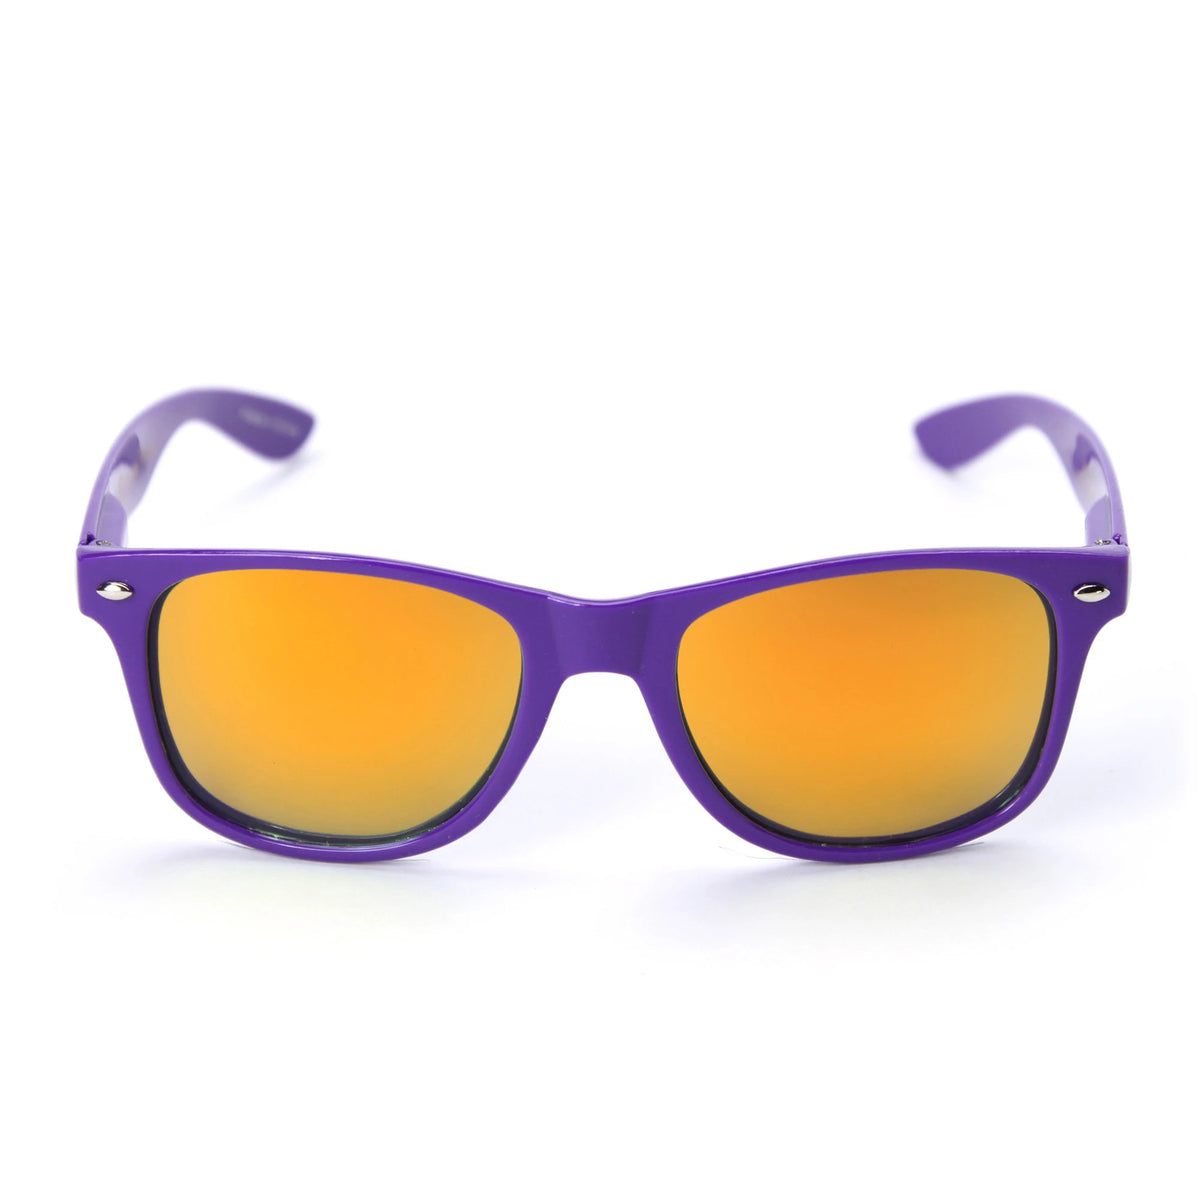 Society43 Clemson Tigers Sunglasses